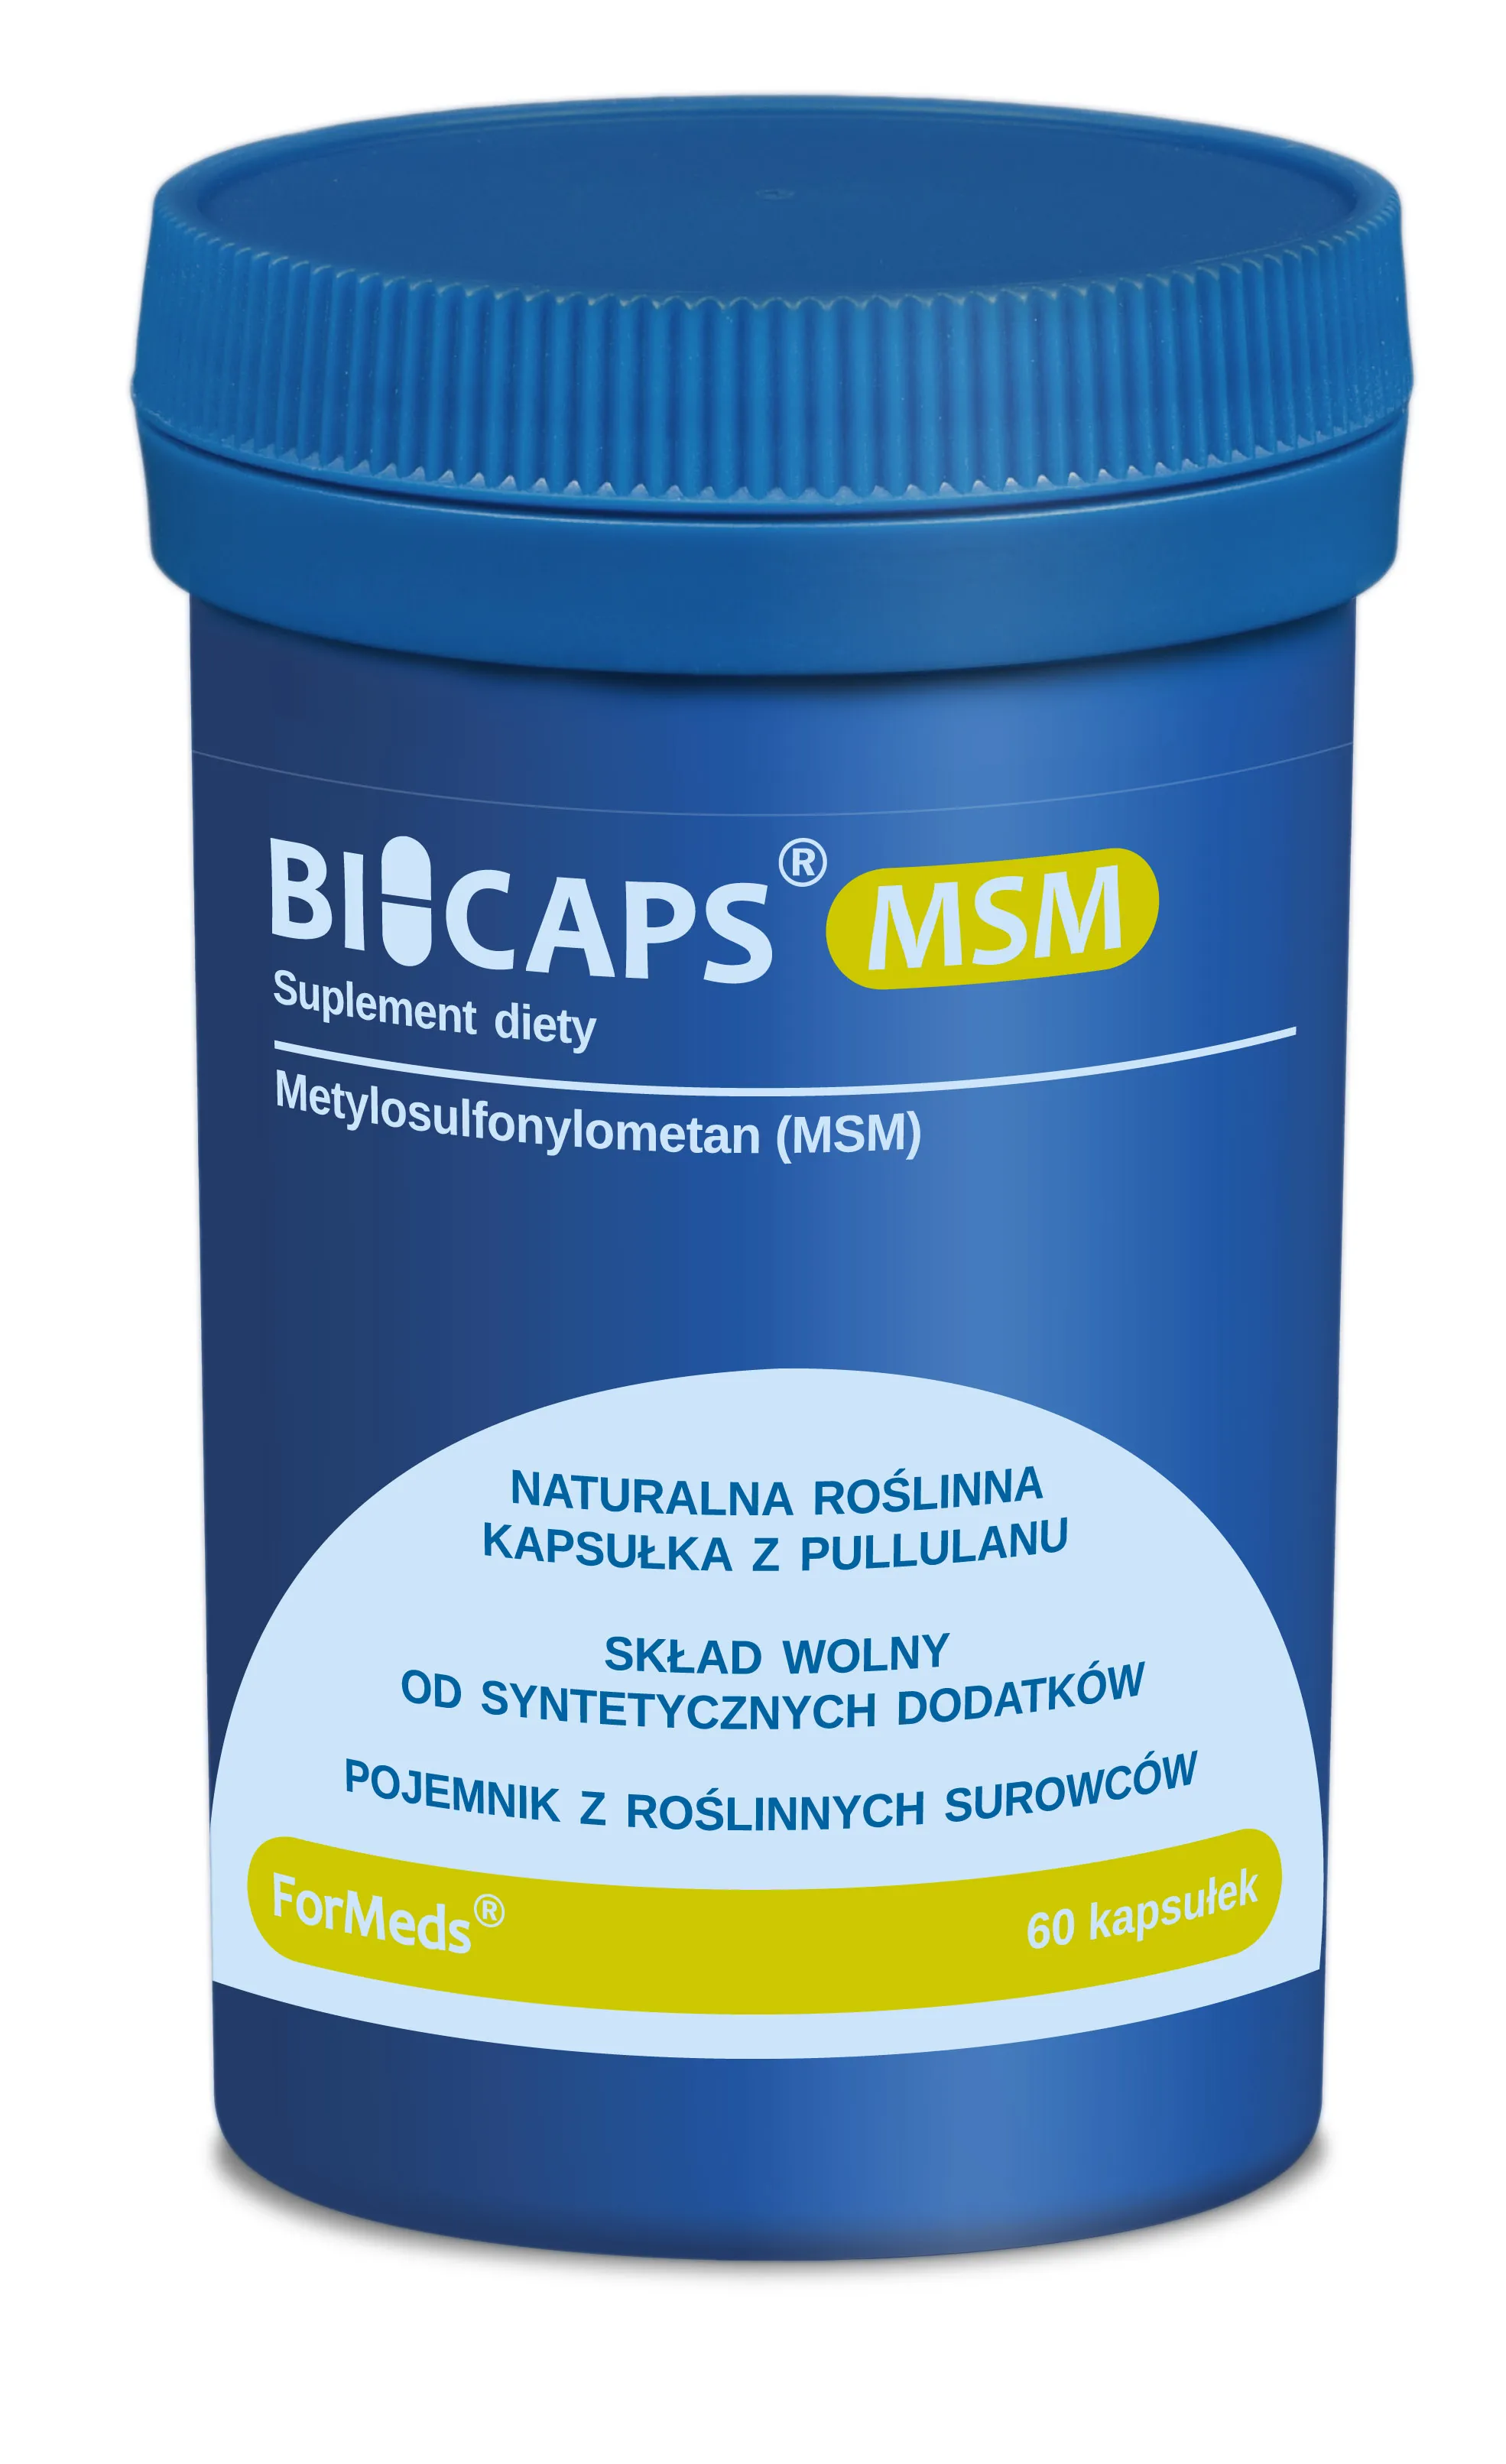 ForMeds Bicaps MSM, suplement diety, 60 kapsułek